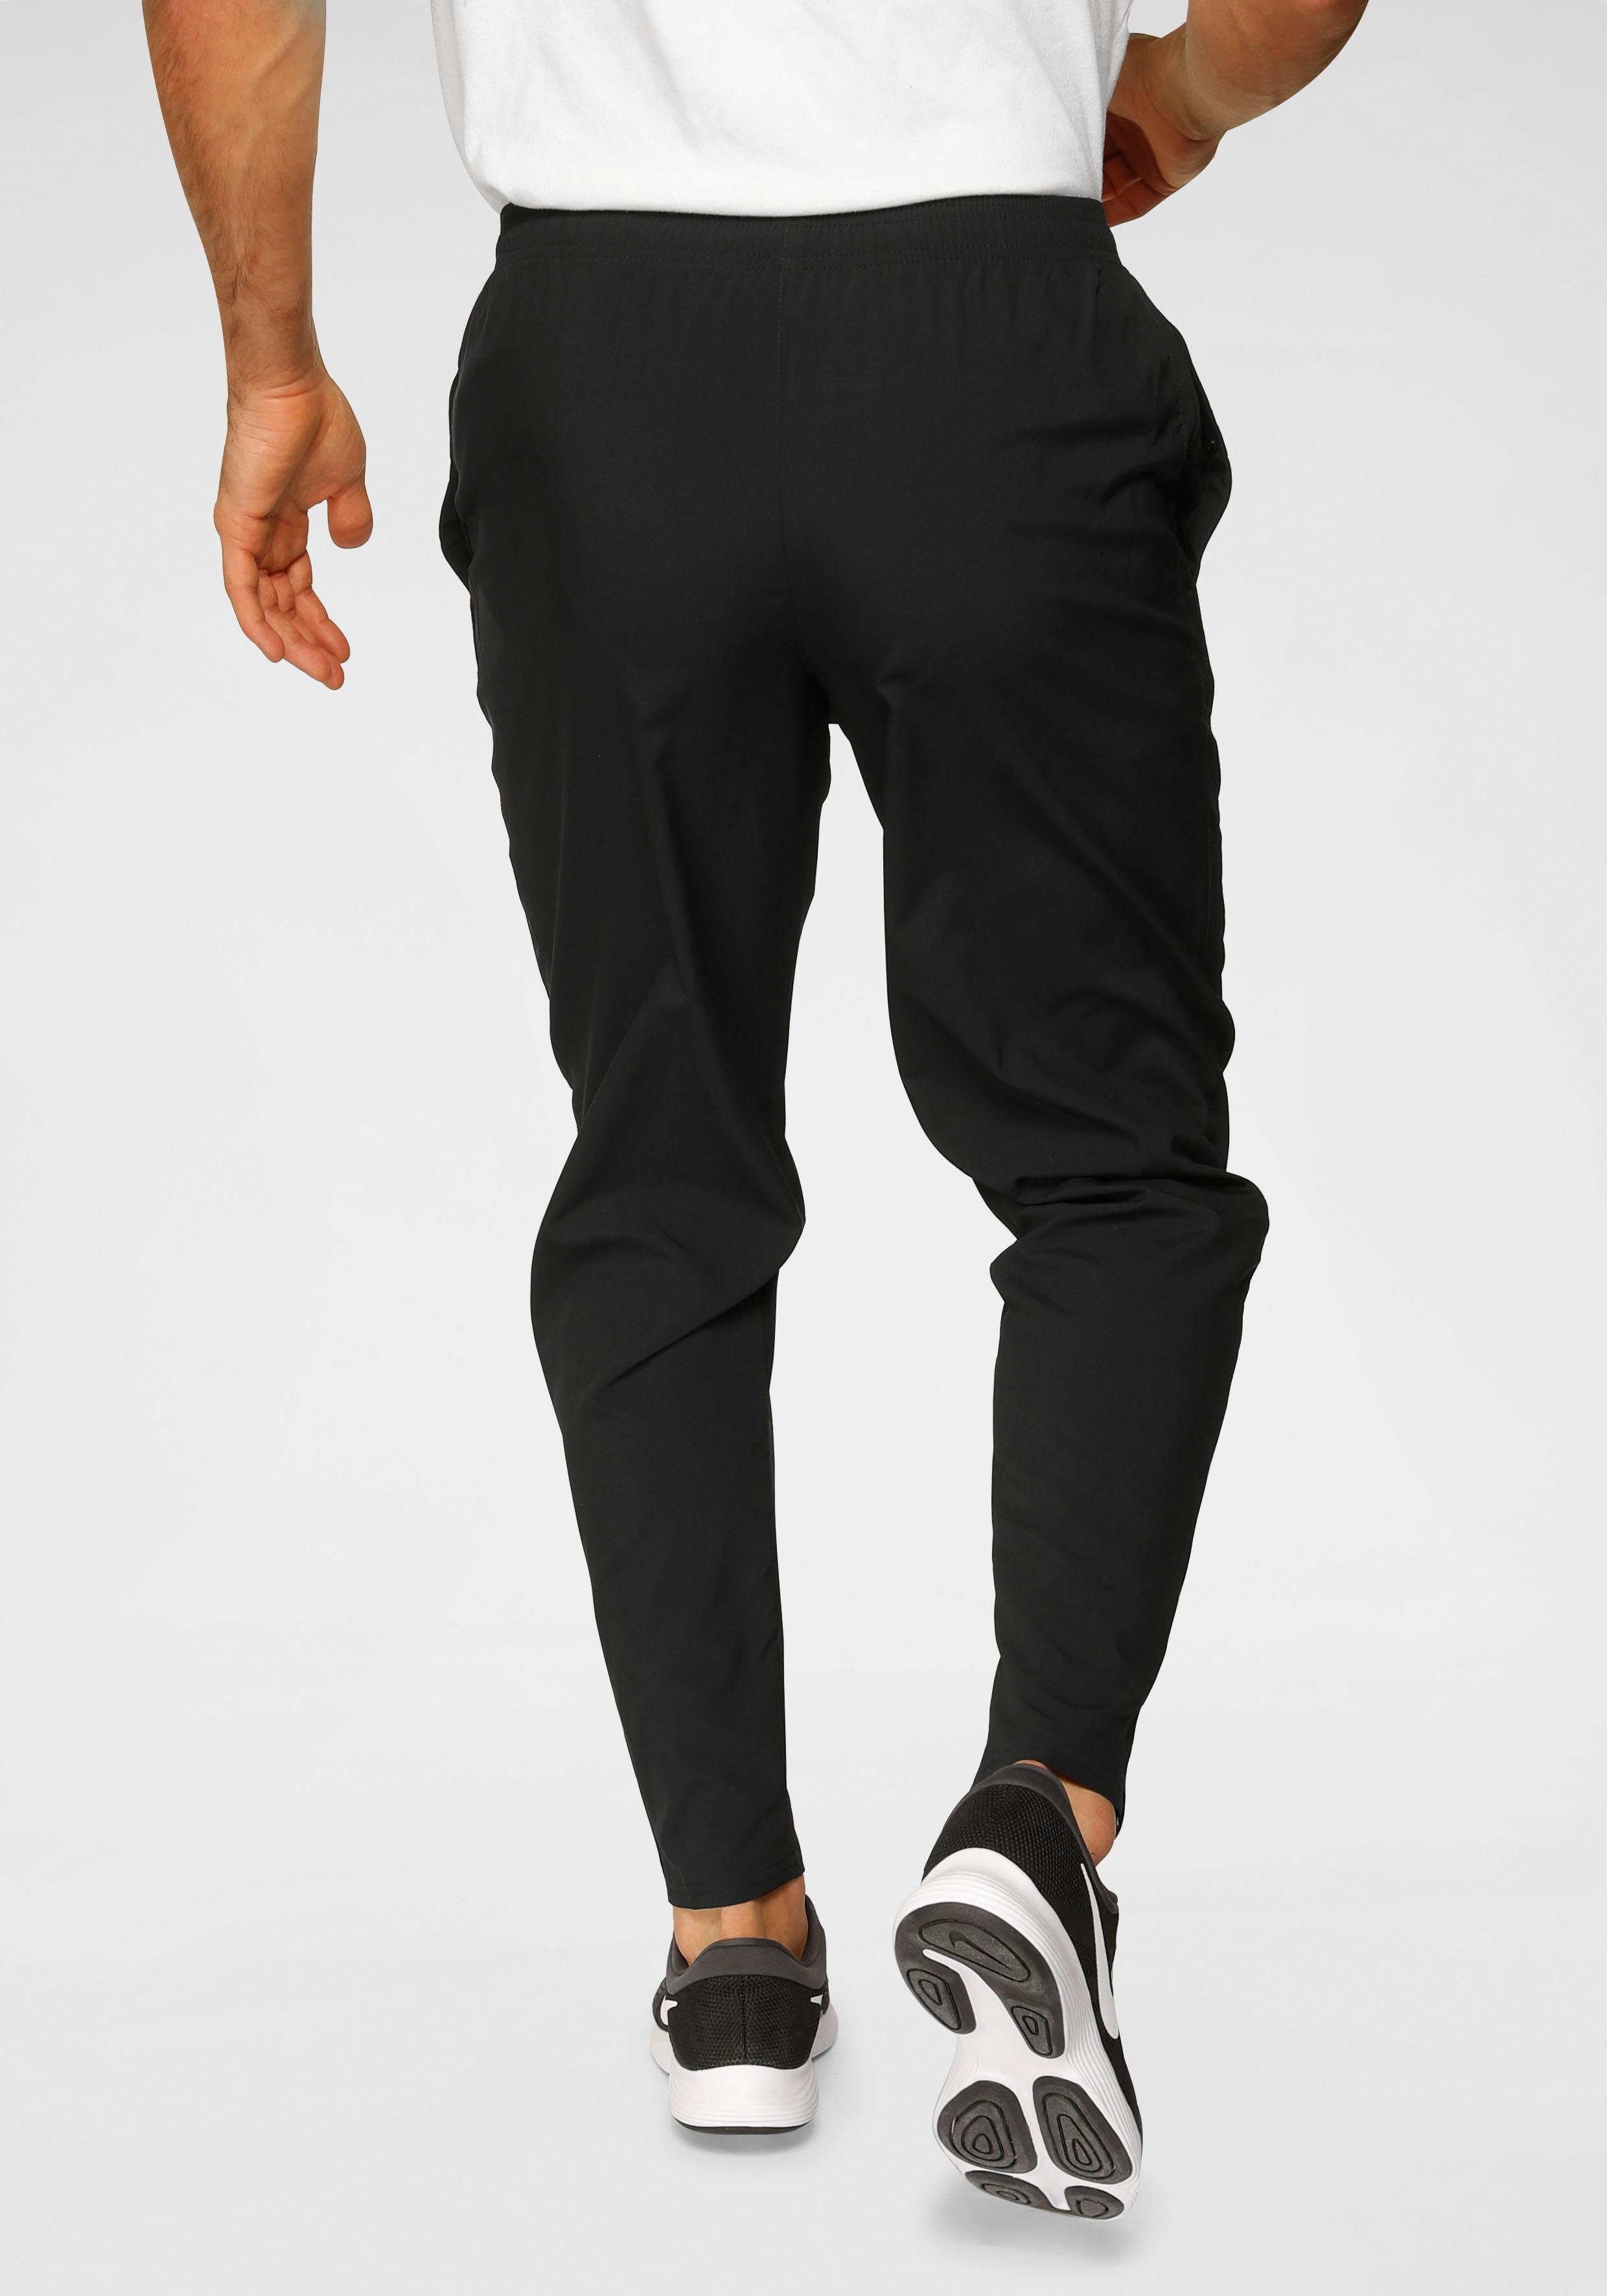 Nike Laufhose »M Nk Run Stripe Woven Pant« kaufen | OTTO